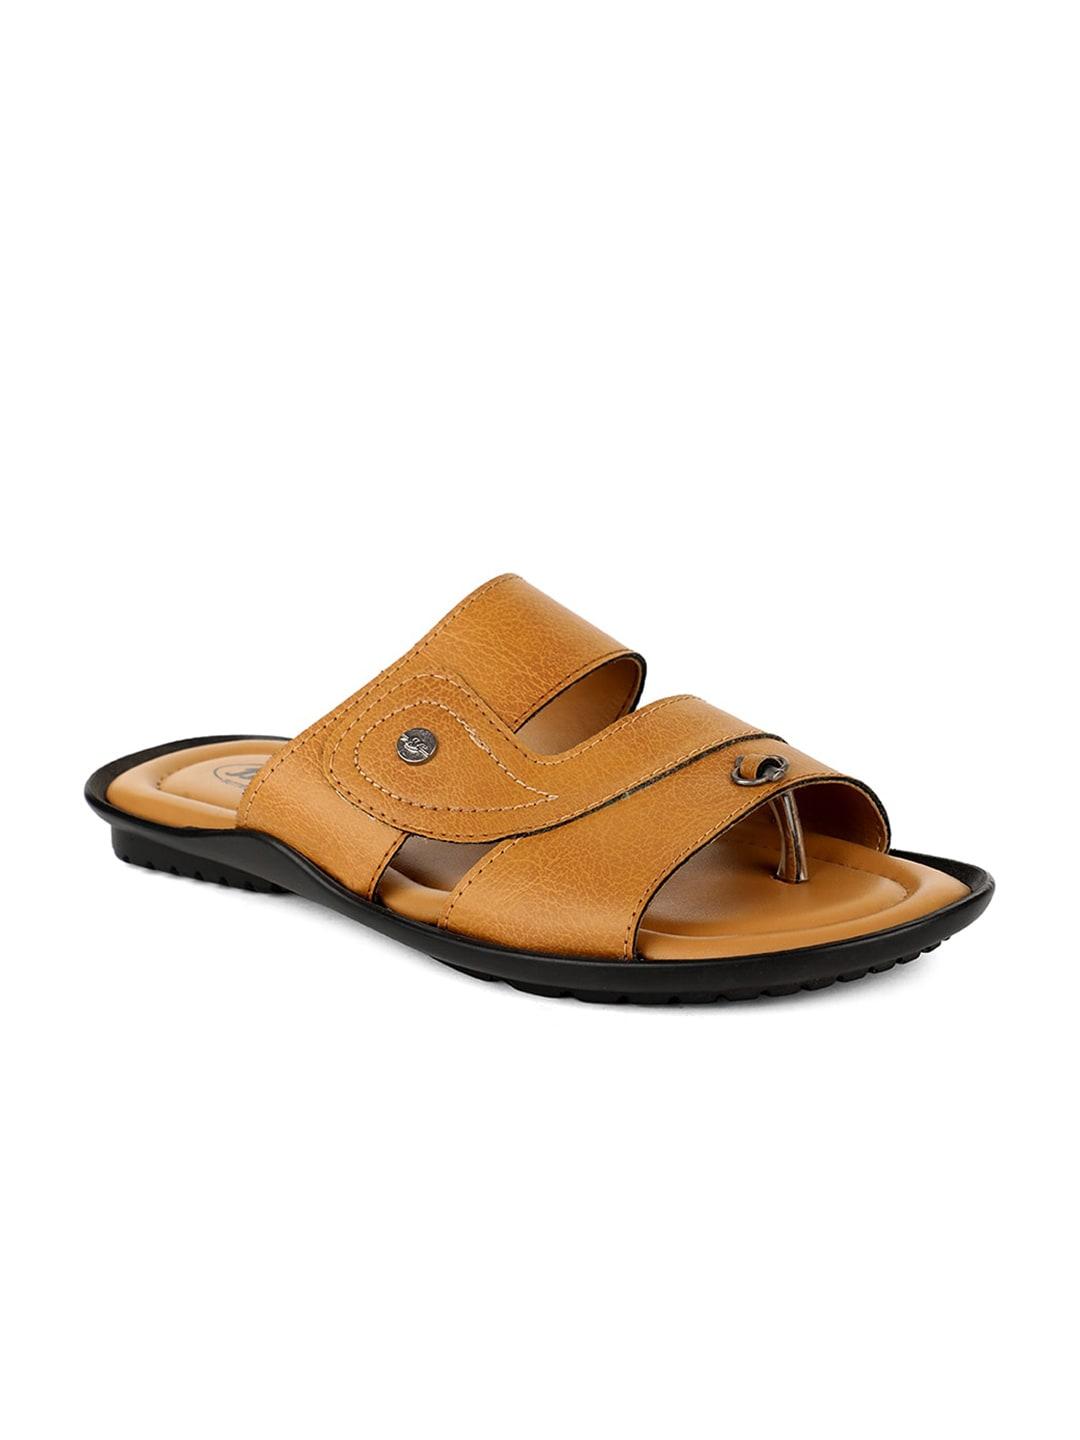 bata-men-tan-&-black-ethnic-comfort-sandals